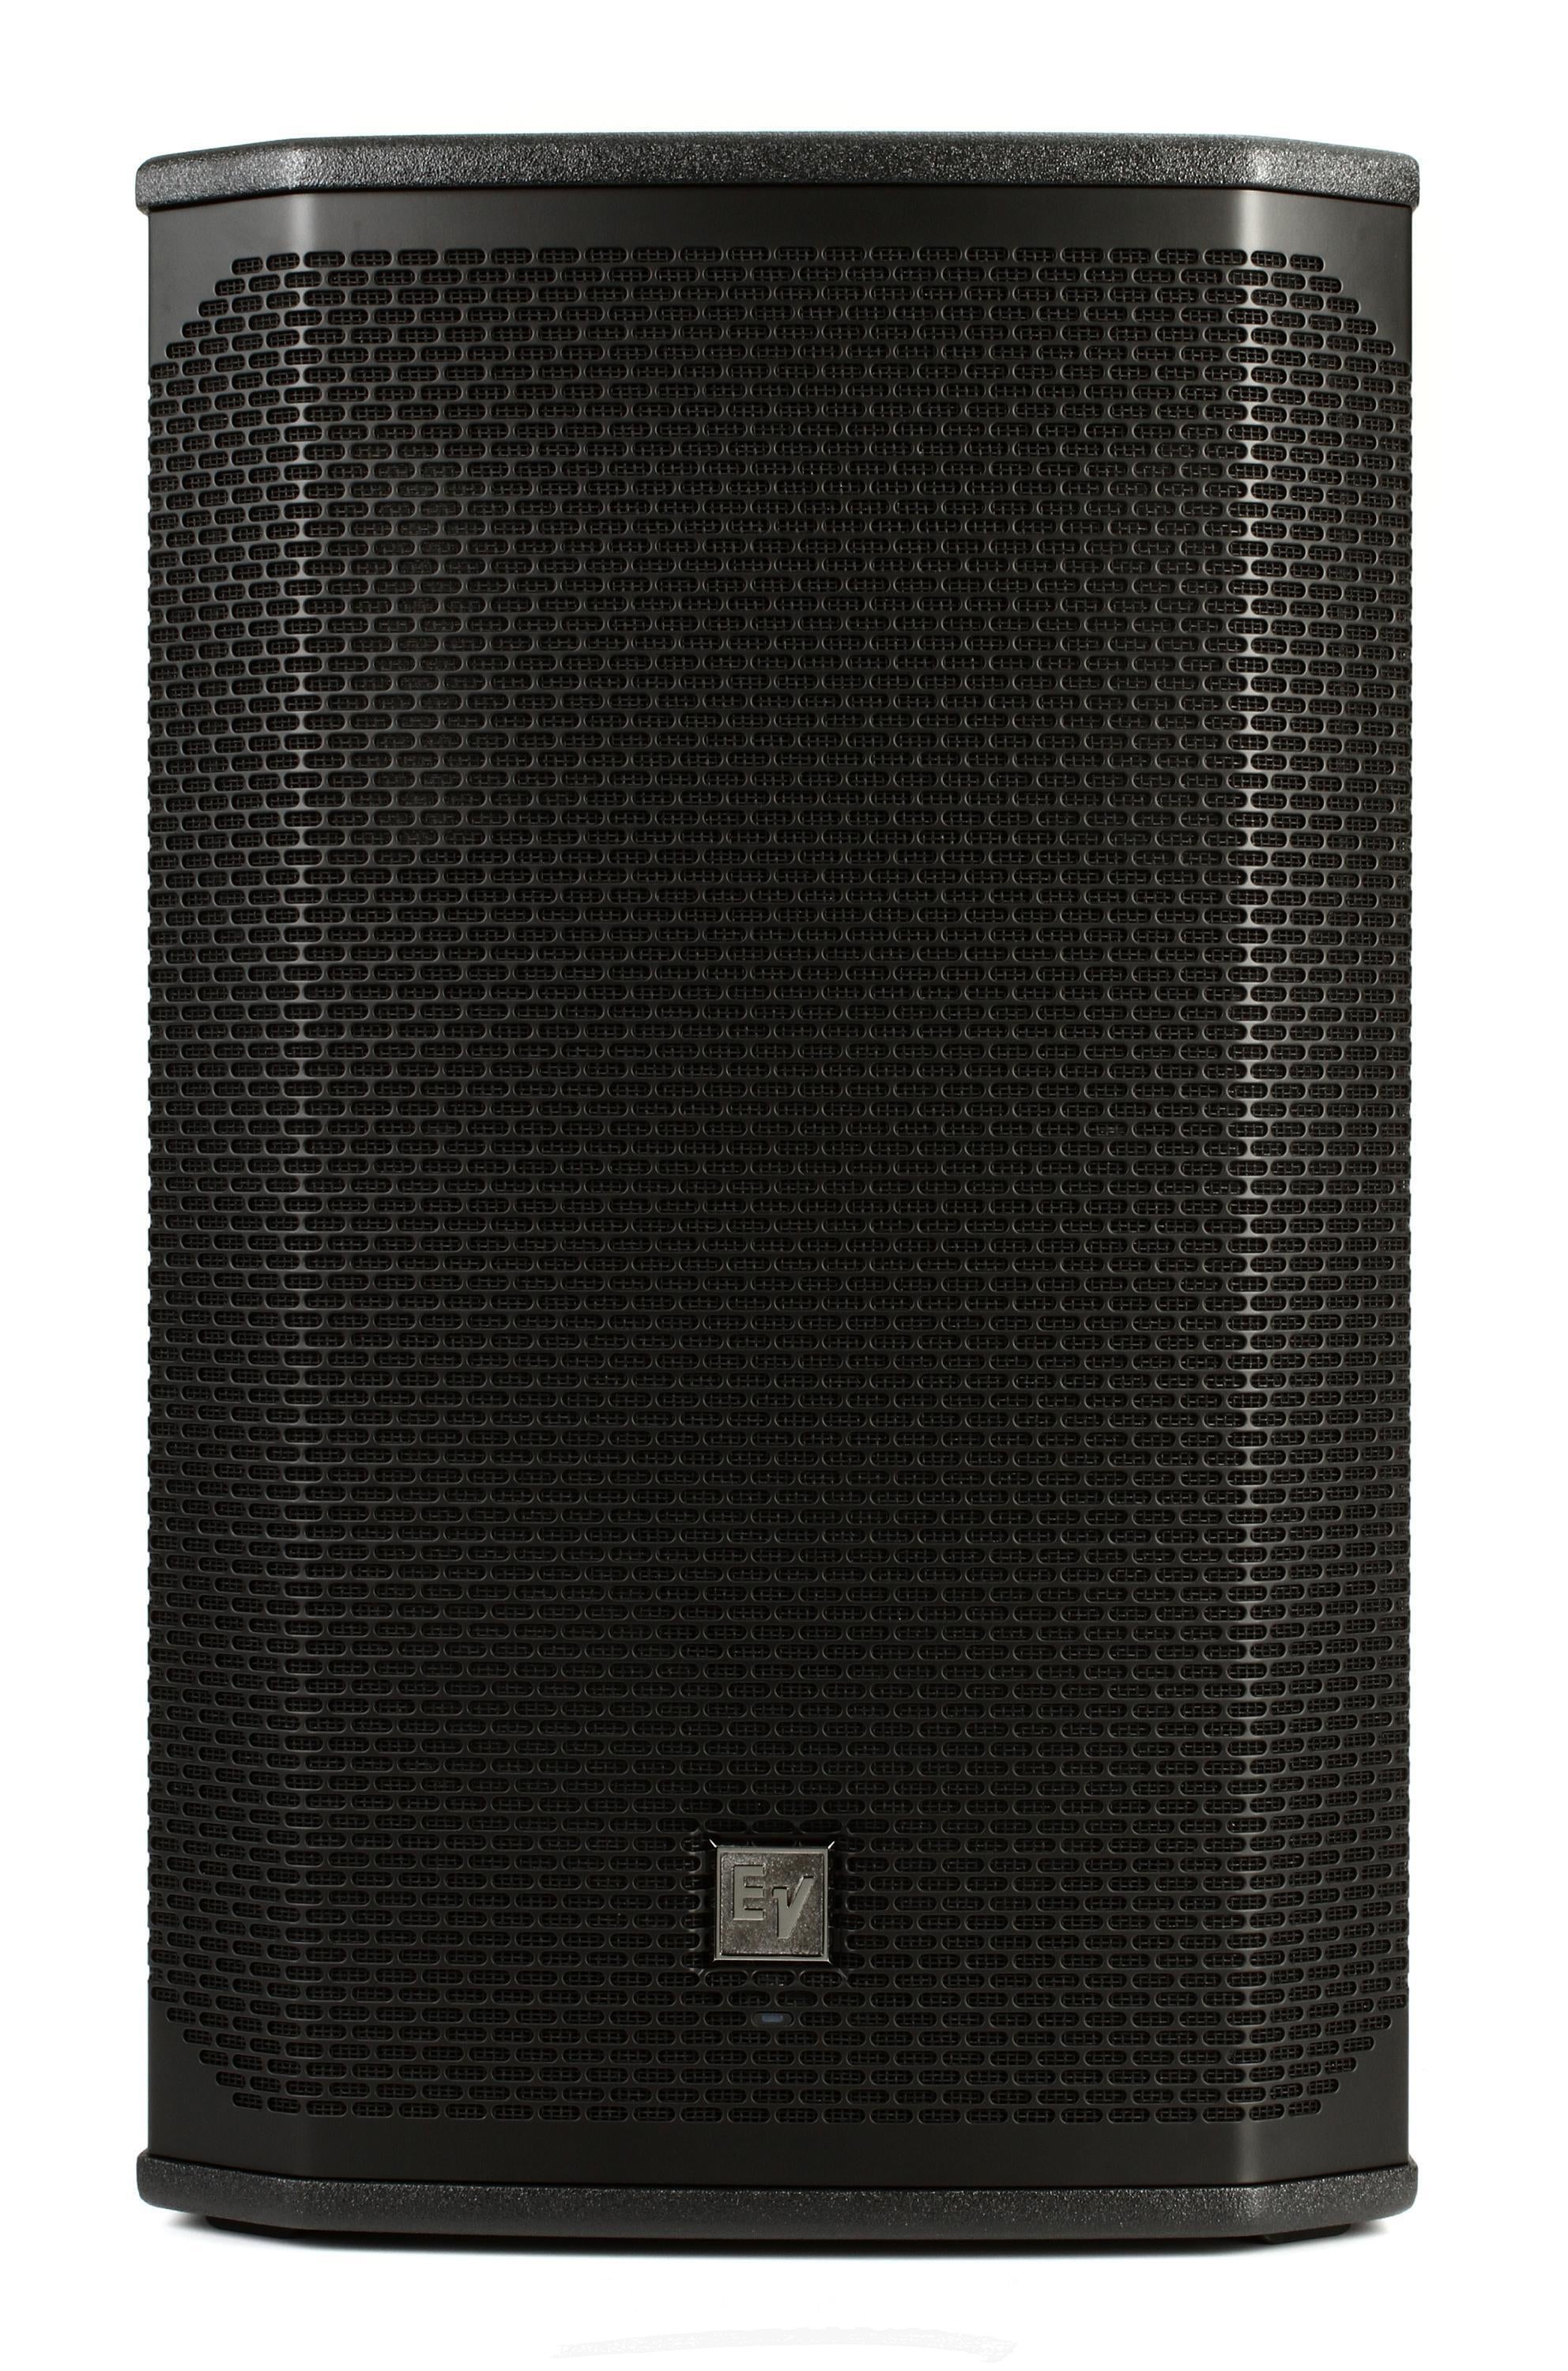 Electro-Voice EKX-12P 1500W 12 inch Powered Speaker | Sweetwater